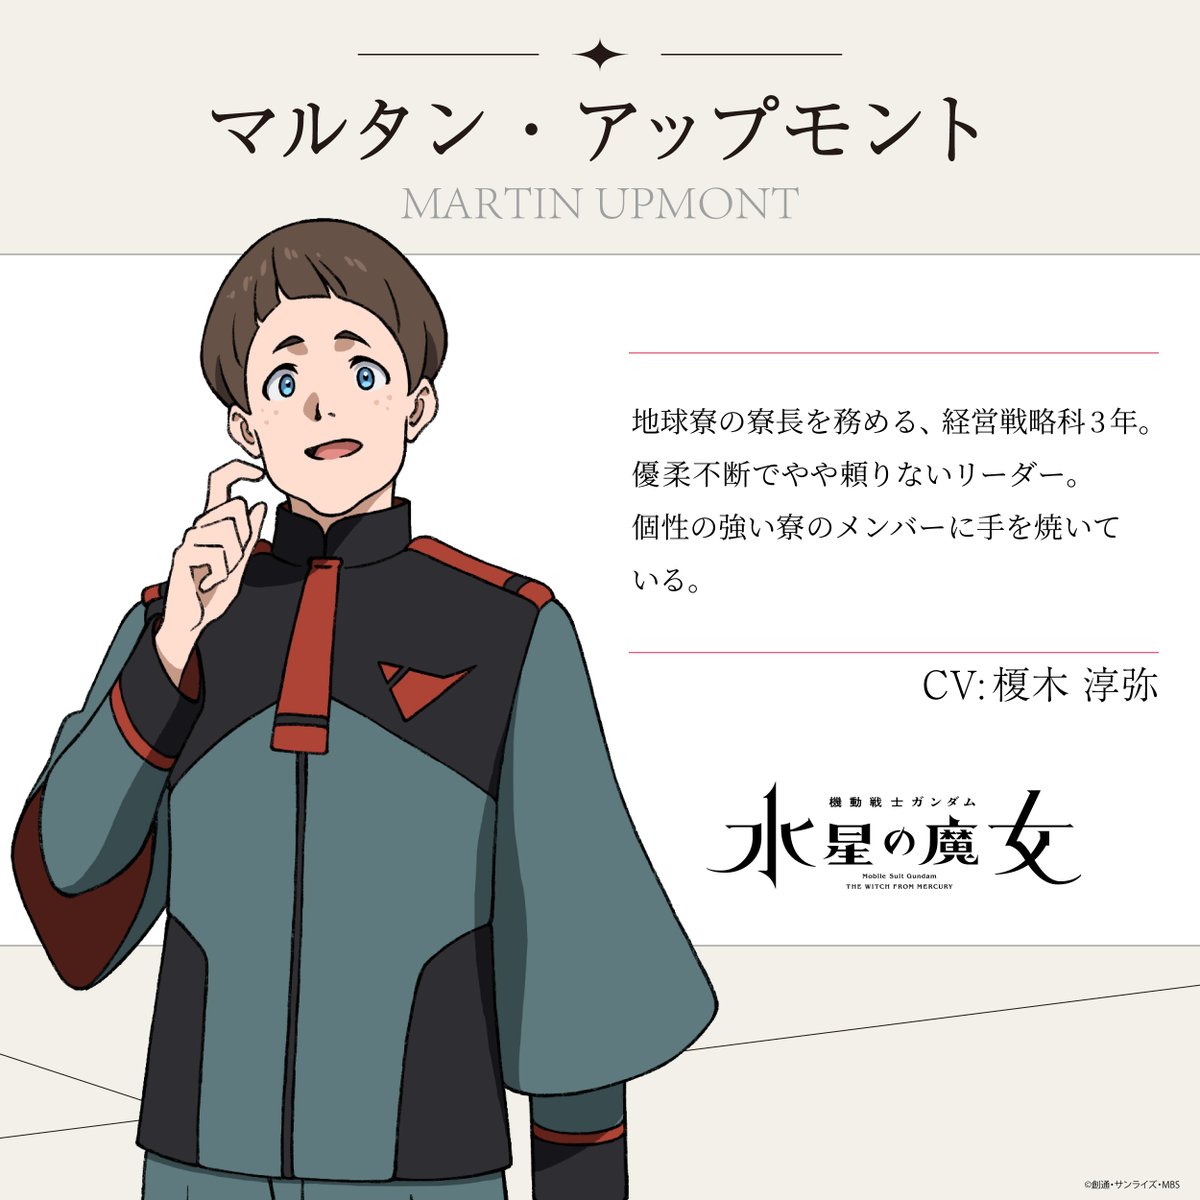 Junya Enoki trong vai Martin Upmont trong Mobile Suit Gundam: The Witch from Mercury